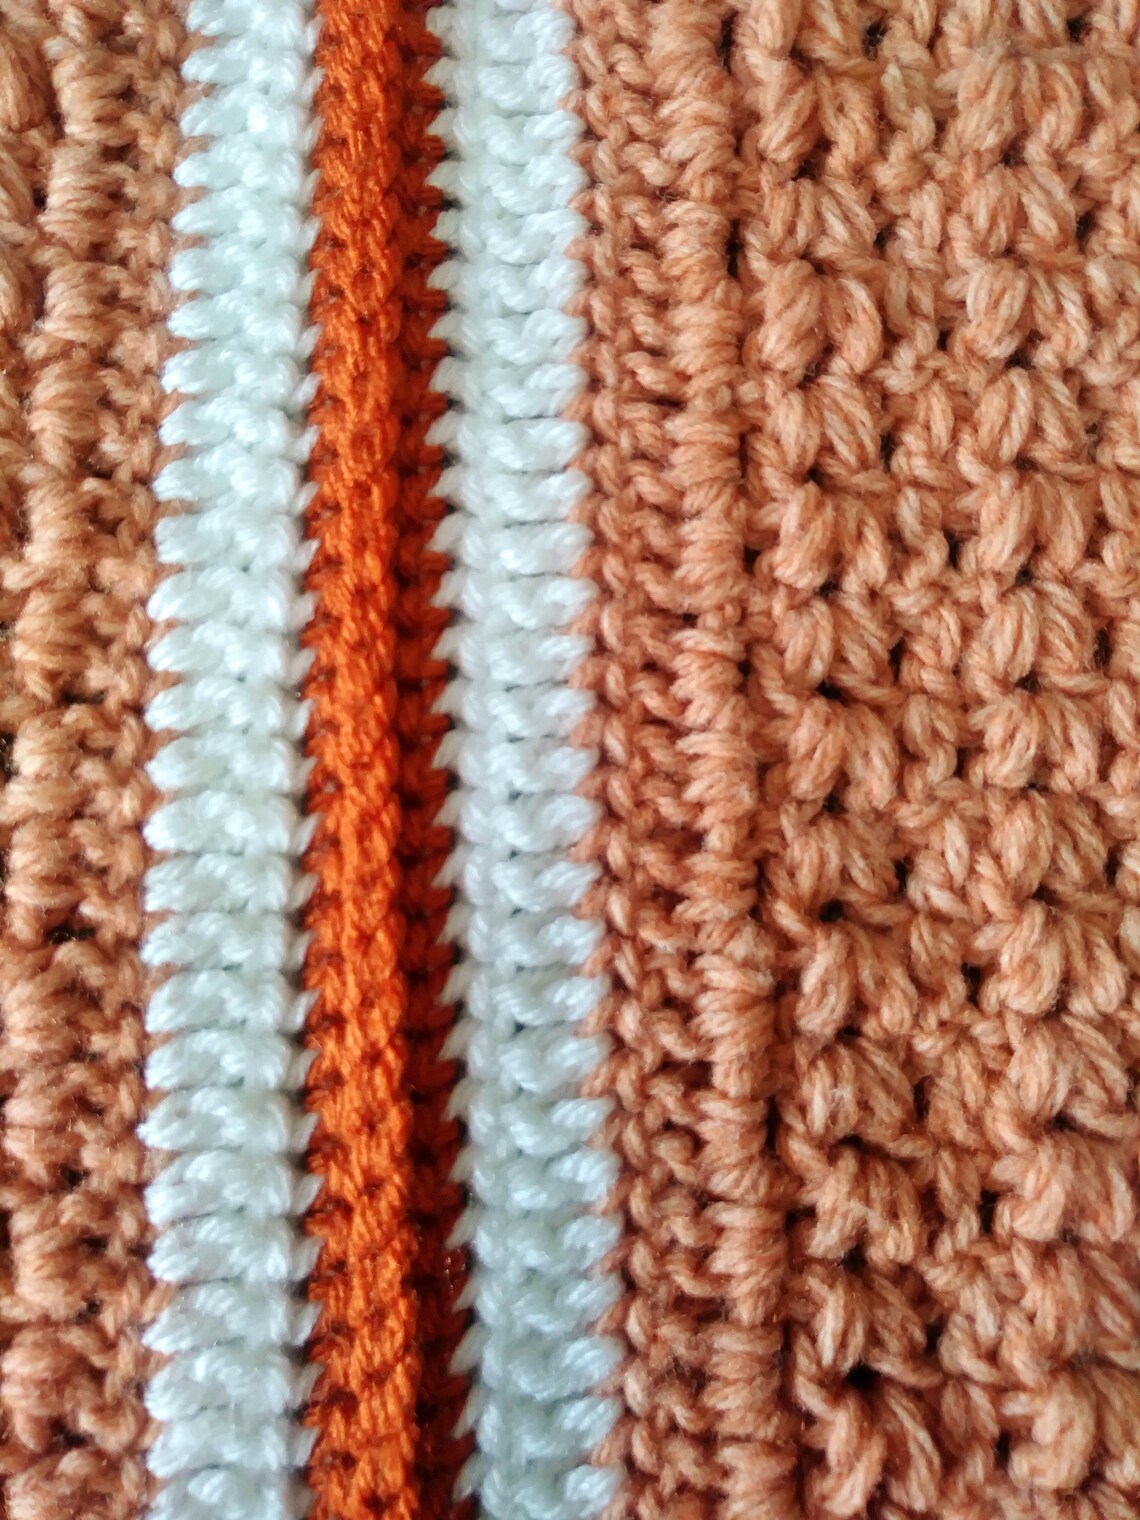 Crocheted Afghan Blanket Throw Salmon Rust White Striped | Etsy